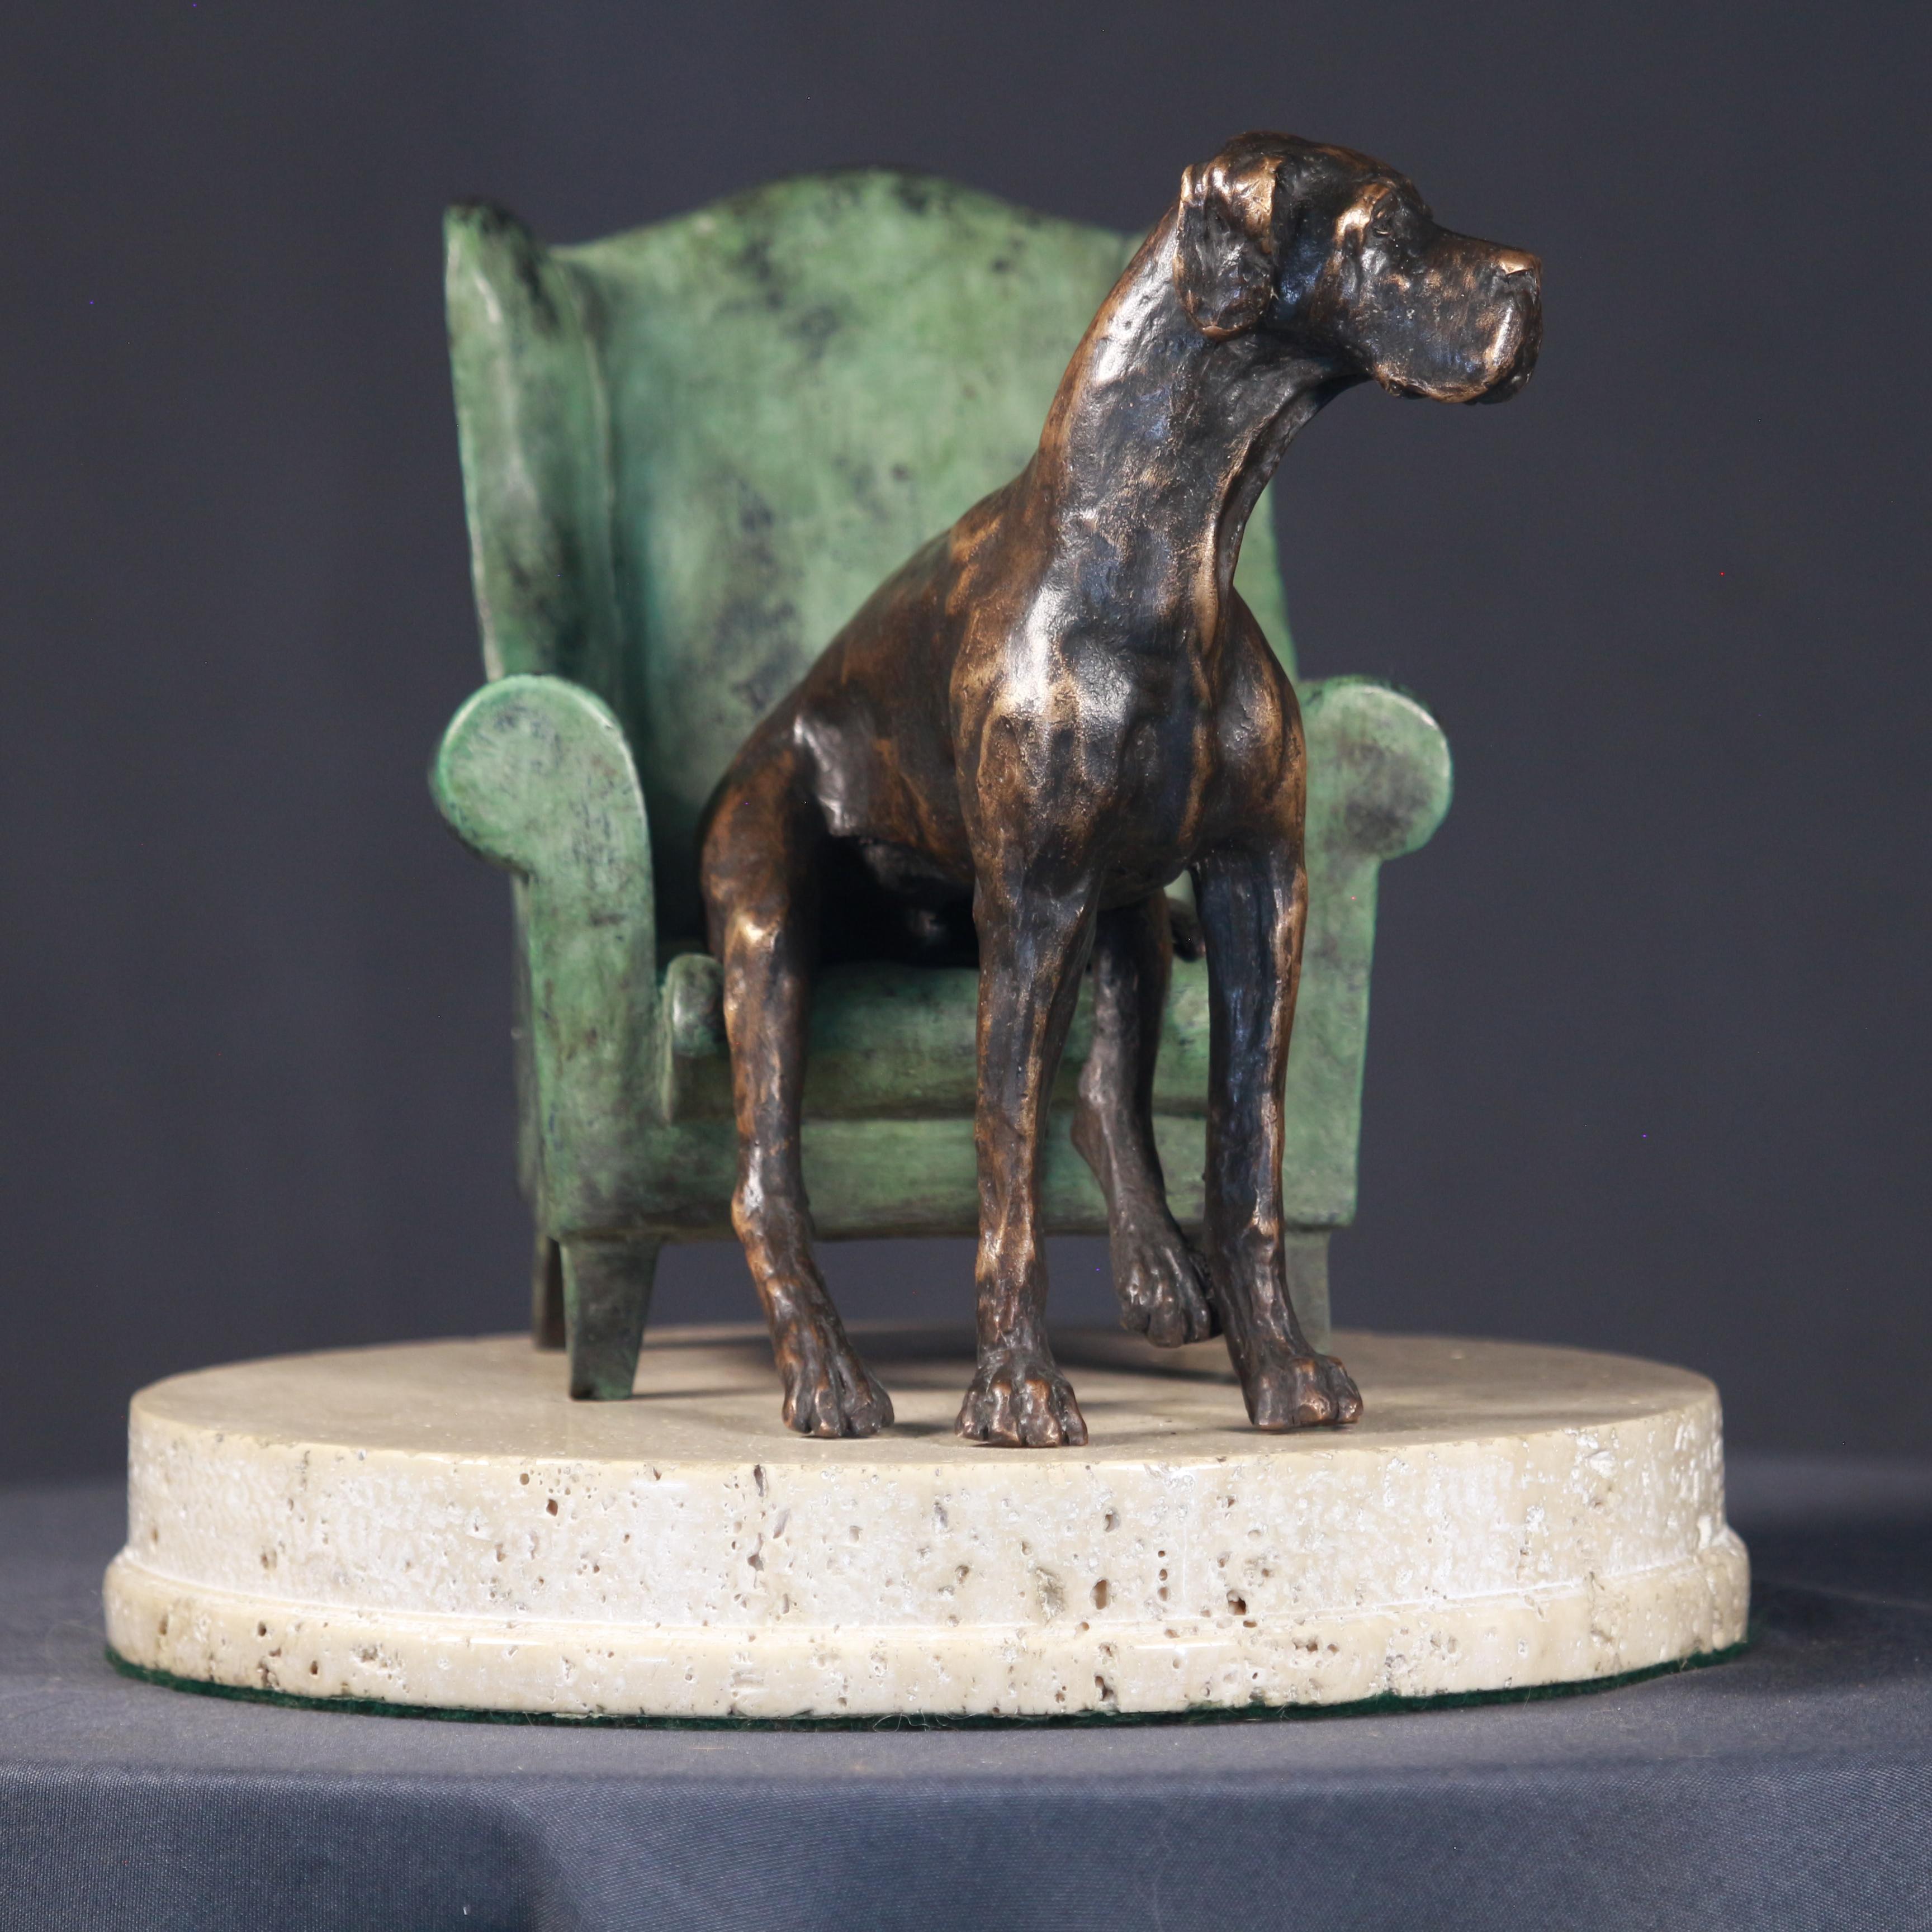 Willem Botha  Figurative Sculpture - Rex and his Chair- Small Sculpture Bronze Colors Brown Green Dash Black Patina